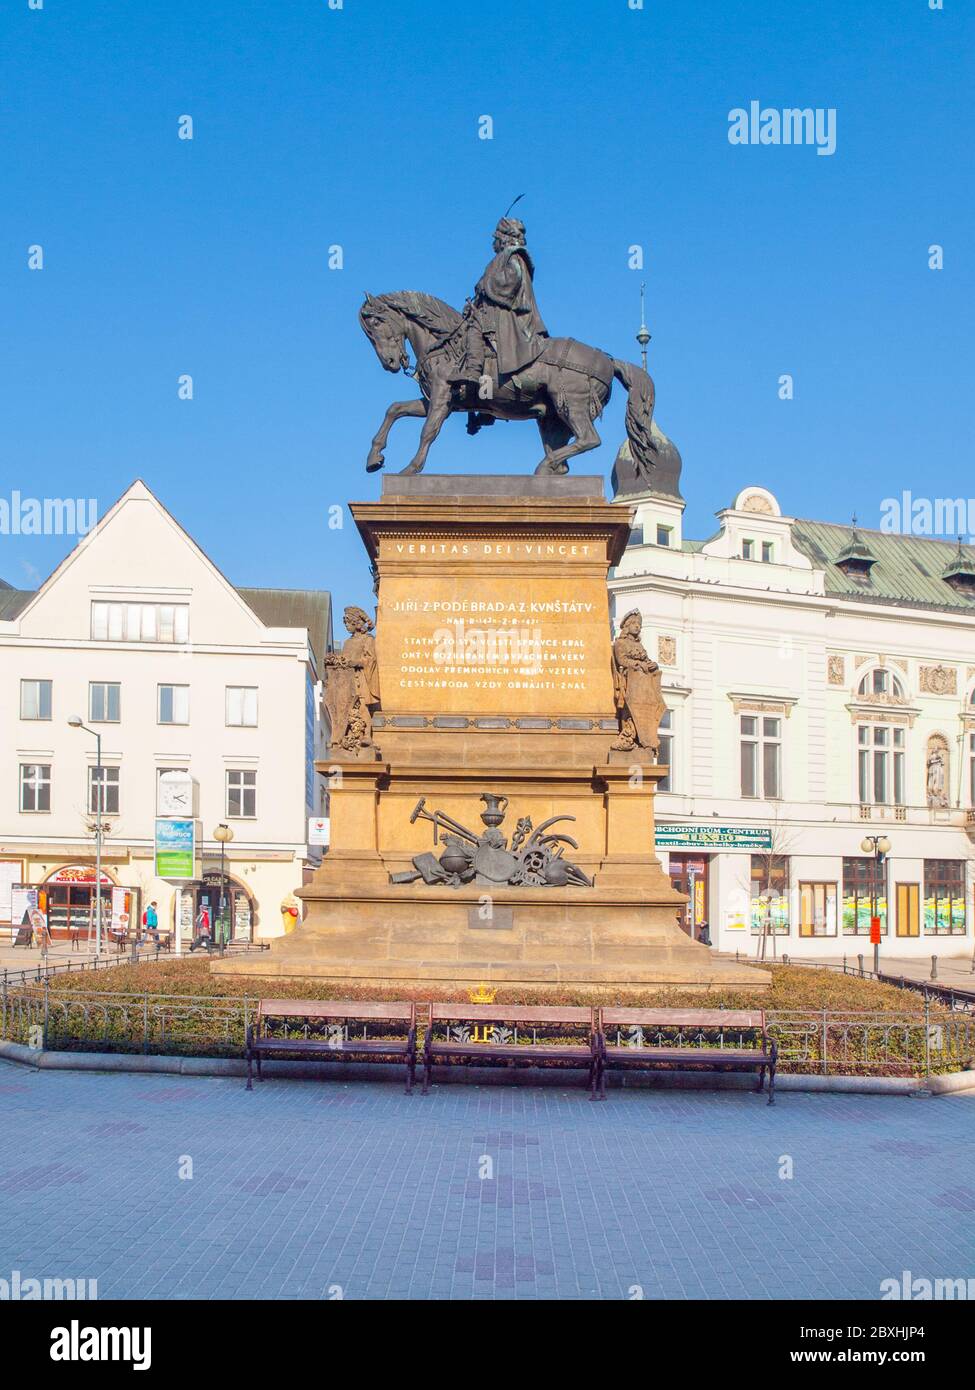 PODEBRADY, CZECH REPUBLIC - FEBRUARY 26, 2018: Equestrian statue of George of Podebrady, Jiri z Podebrad, in Podebrady, Czech Republic. Stock Photo